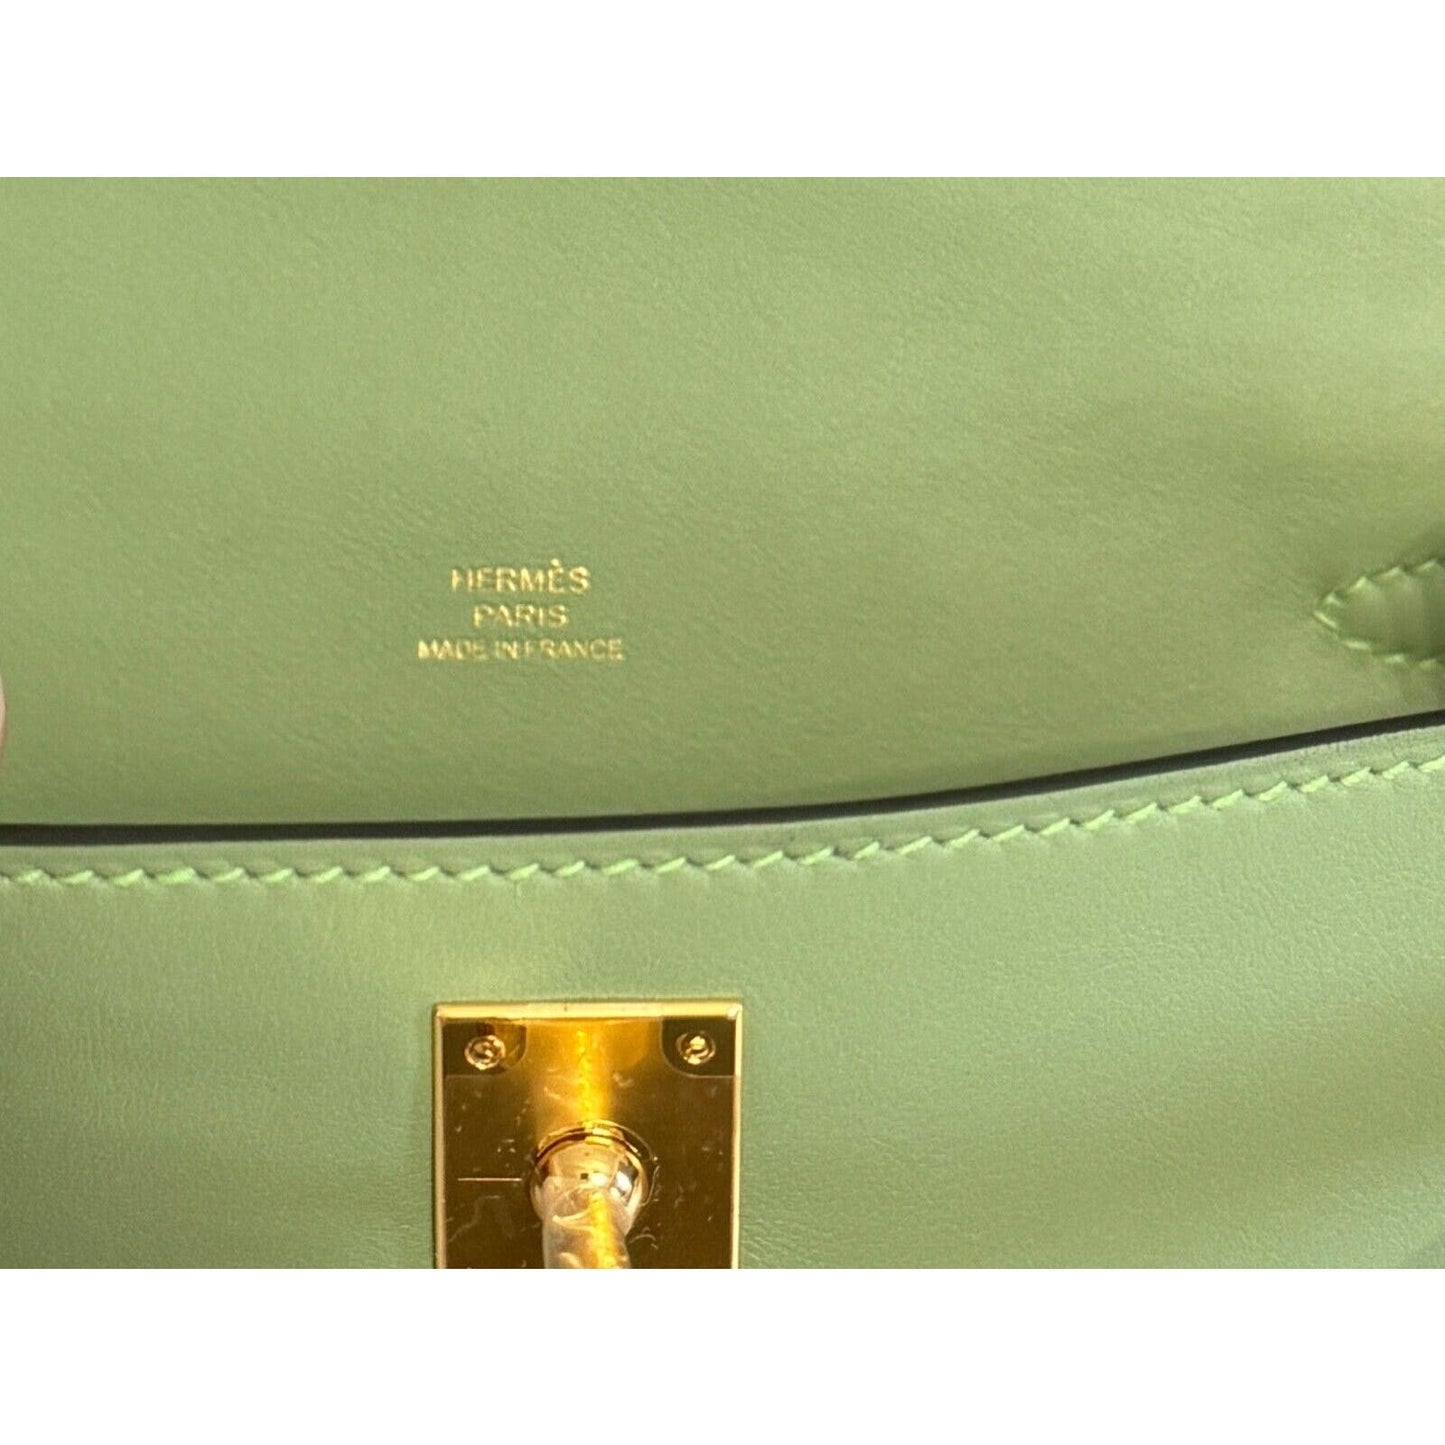 Brand New Hermes Kelly Pochette Vert Criquet Green Bag Palladium Hardware Clutch